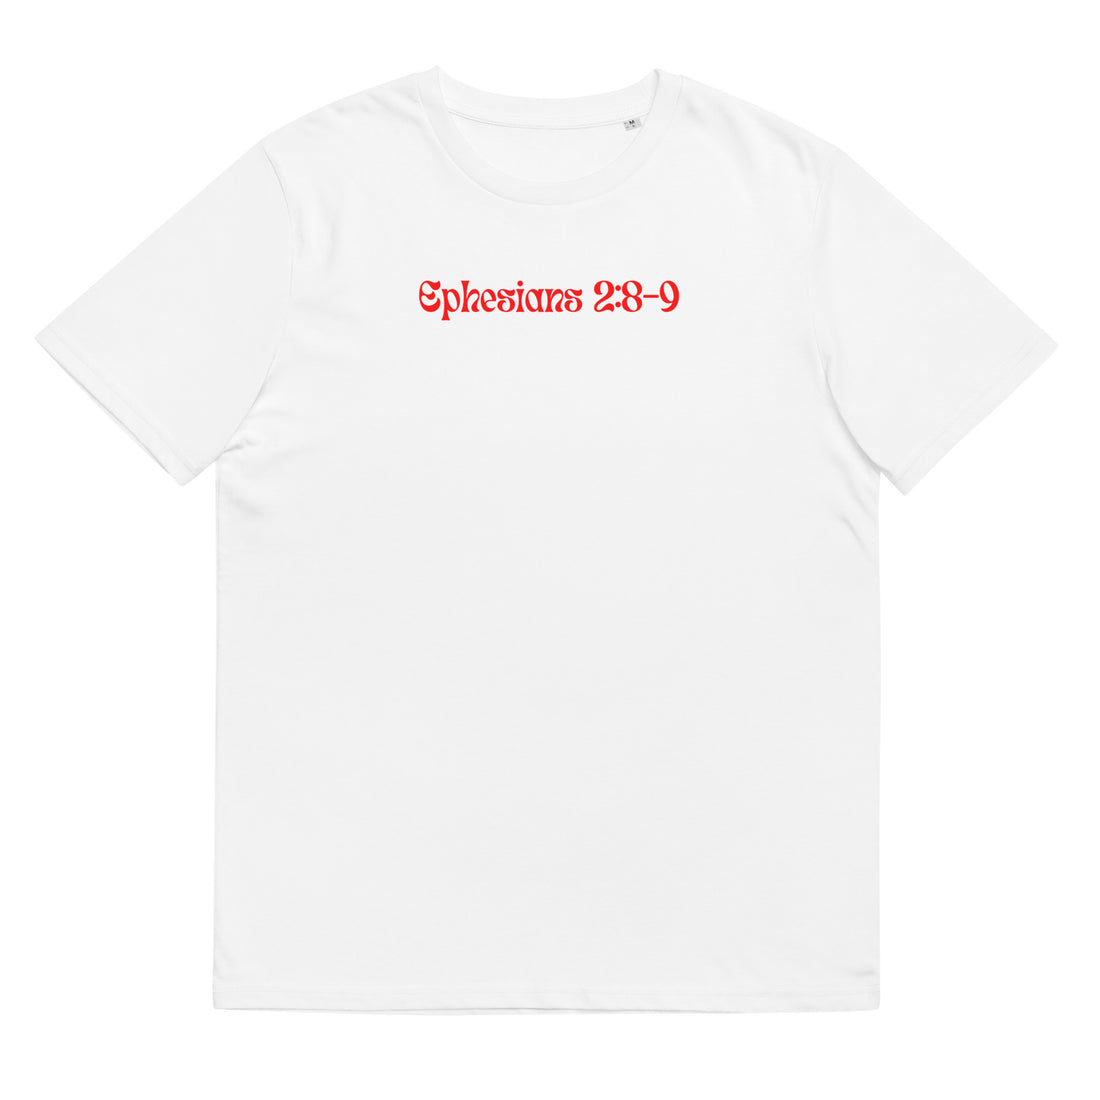 Ephesians 2:8 t-shirt